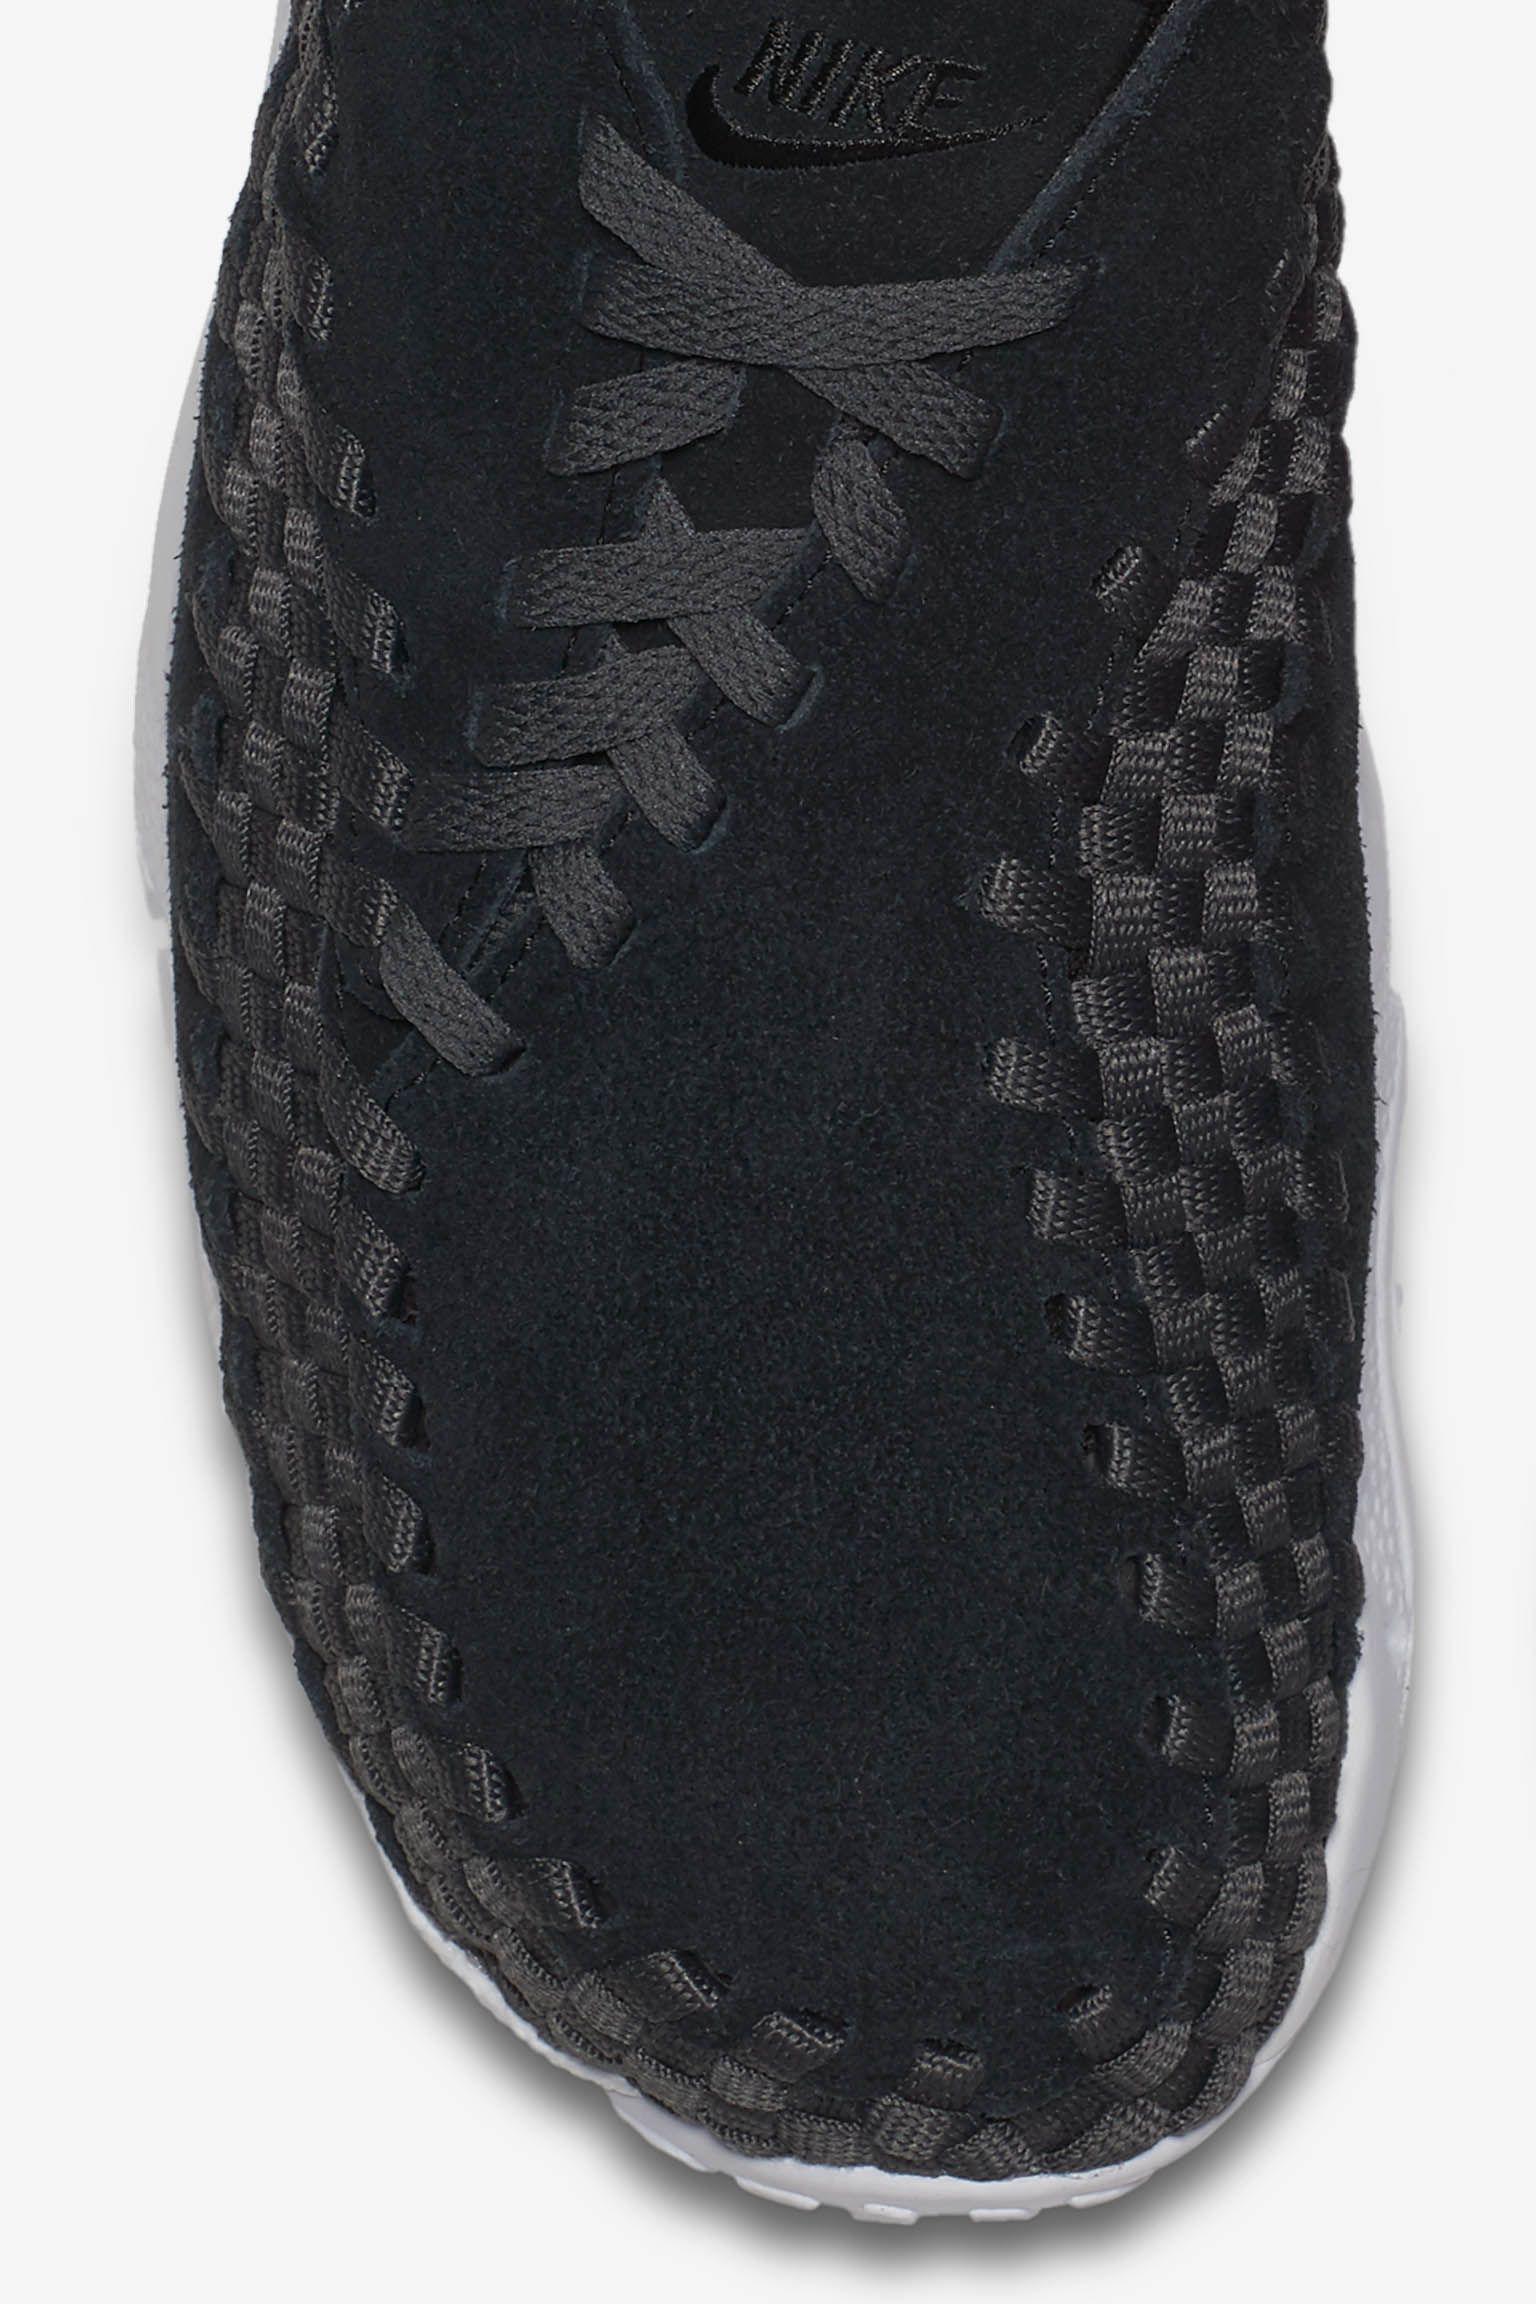 footscape black